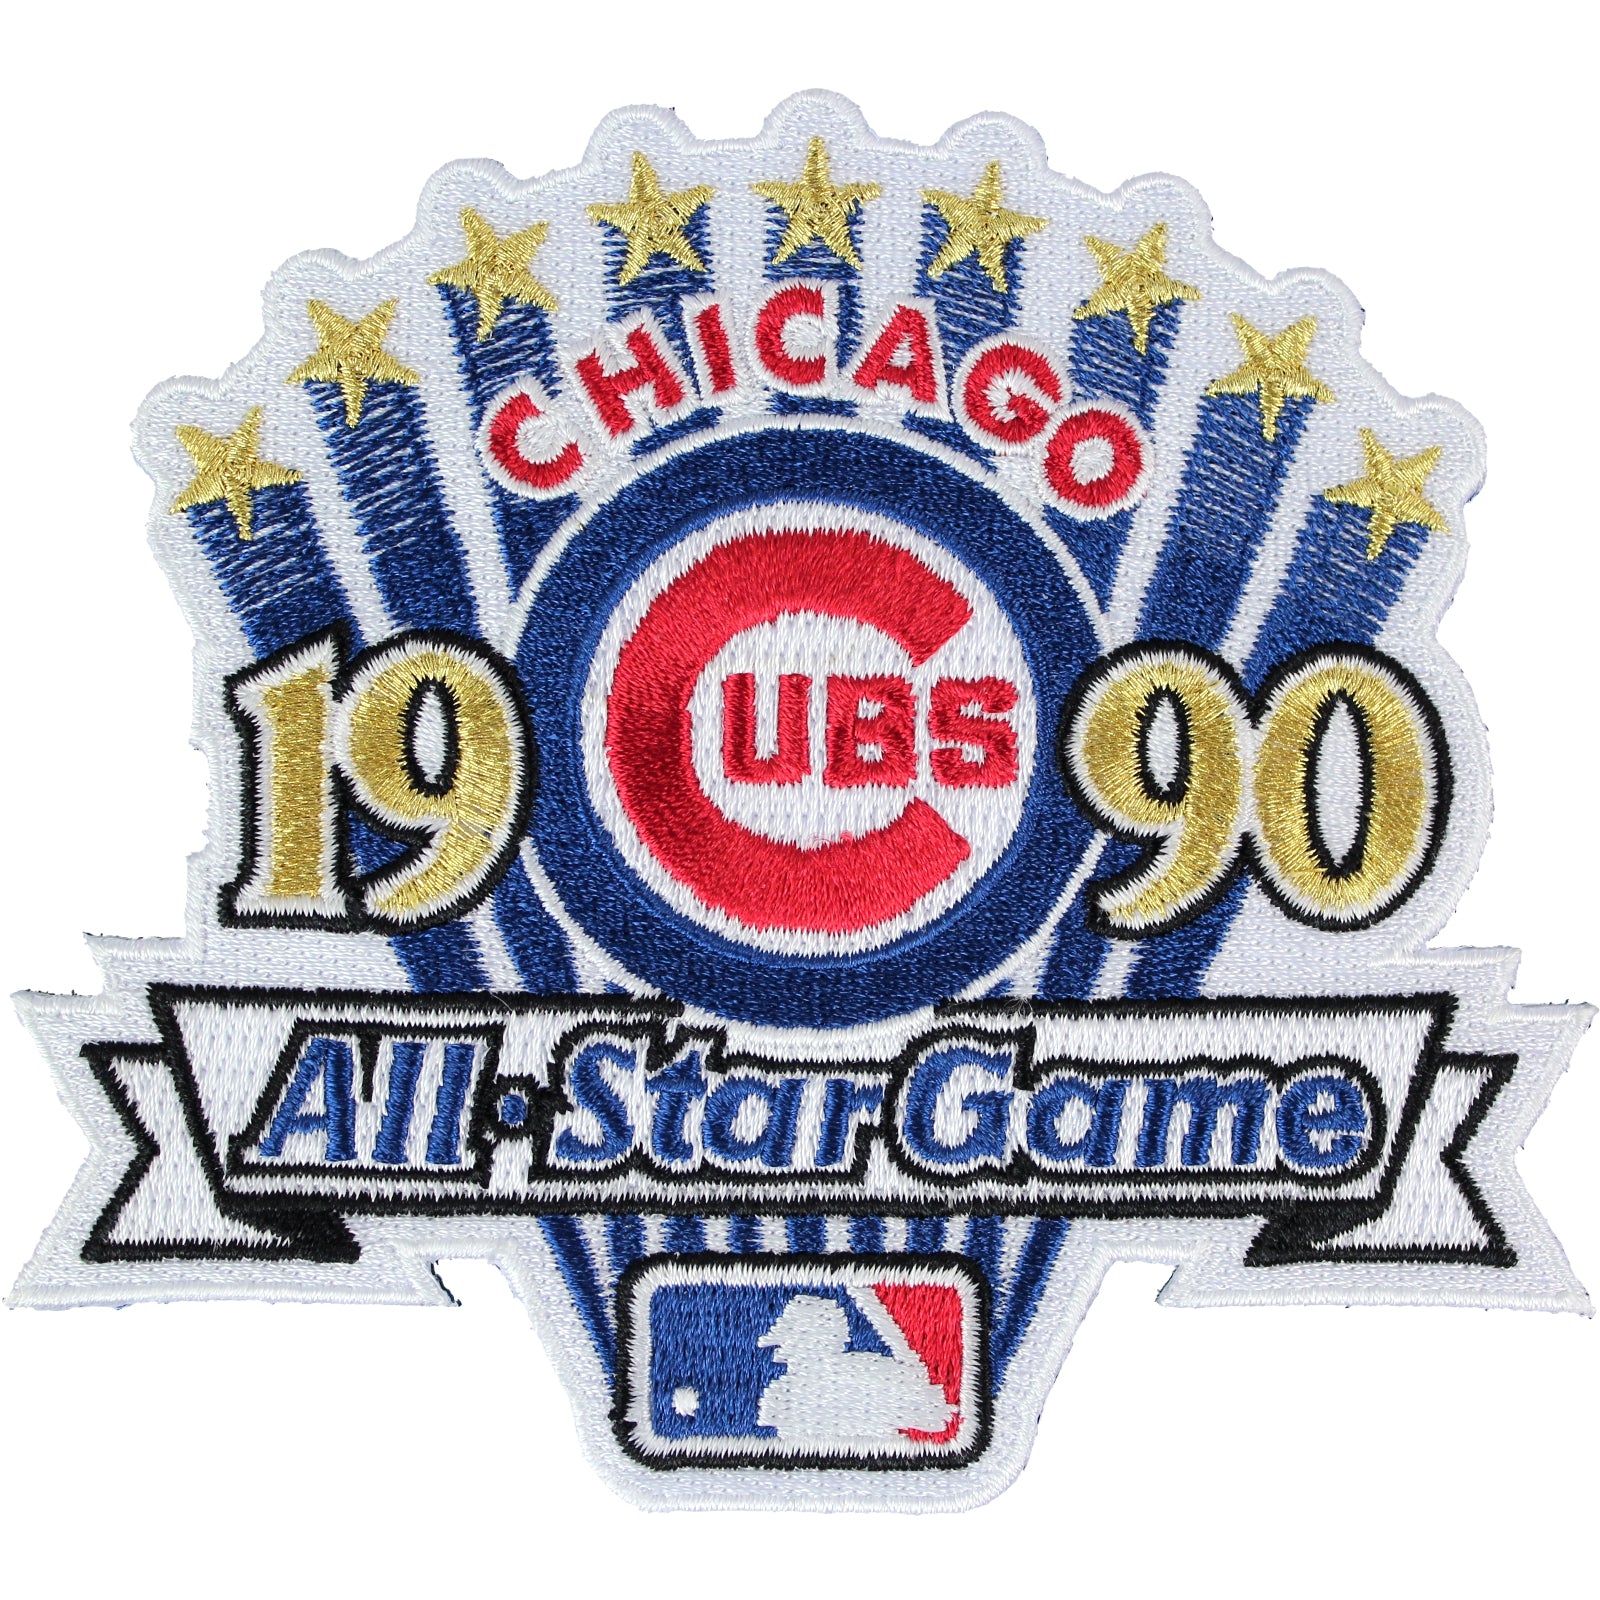 Vintage Chicago Cubs 1990 All Star Game Shirt Size Medium